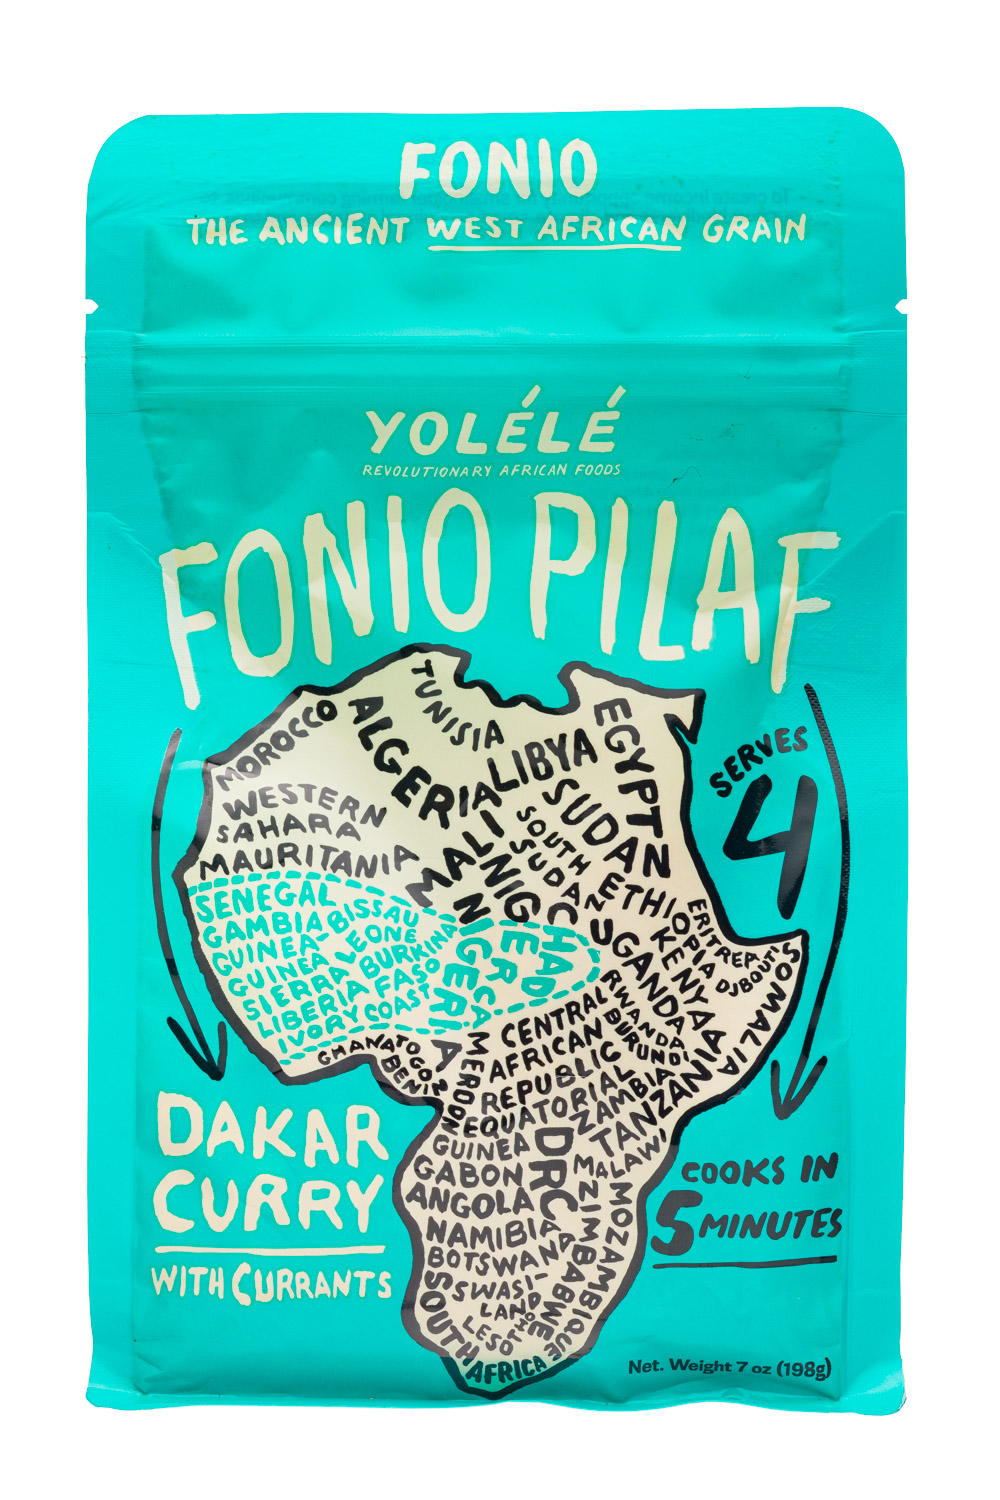 Yolélé Dakar Curry Fonio Pilaf